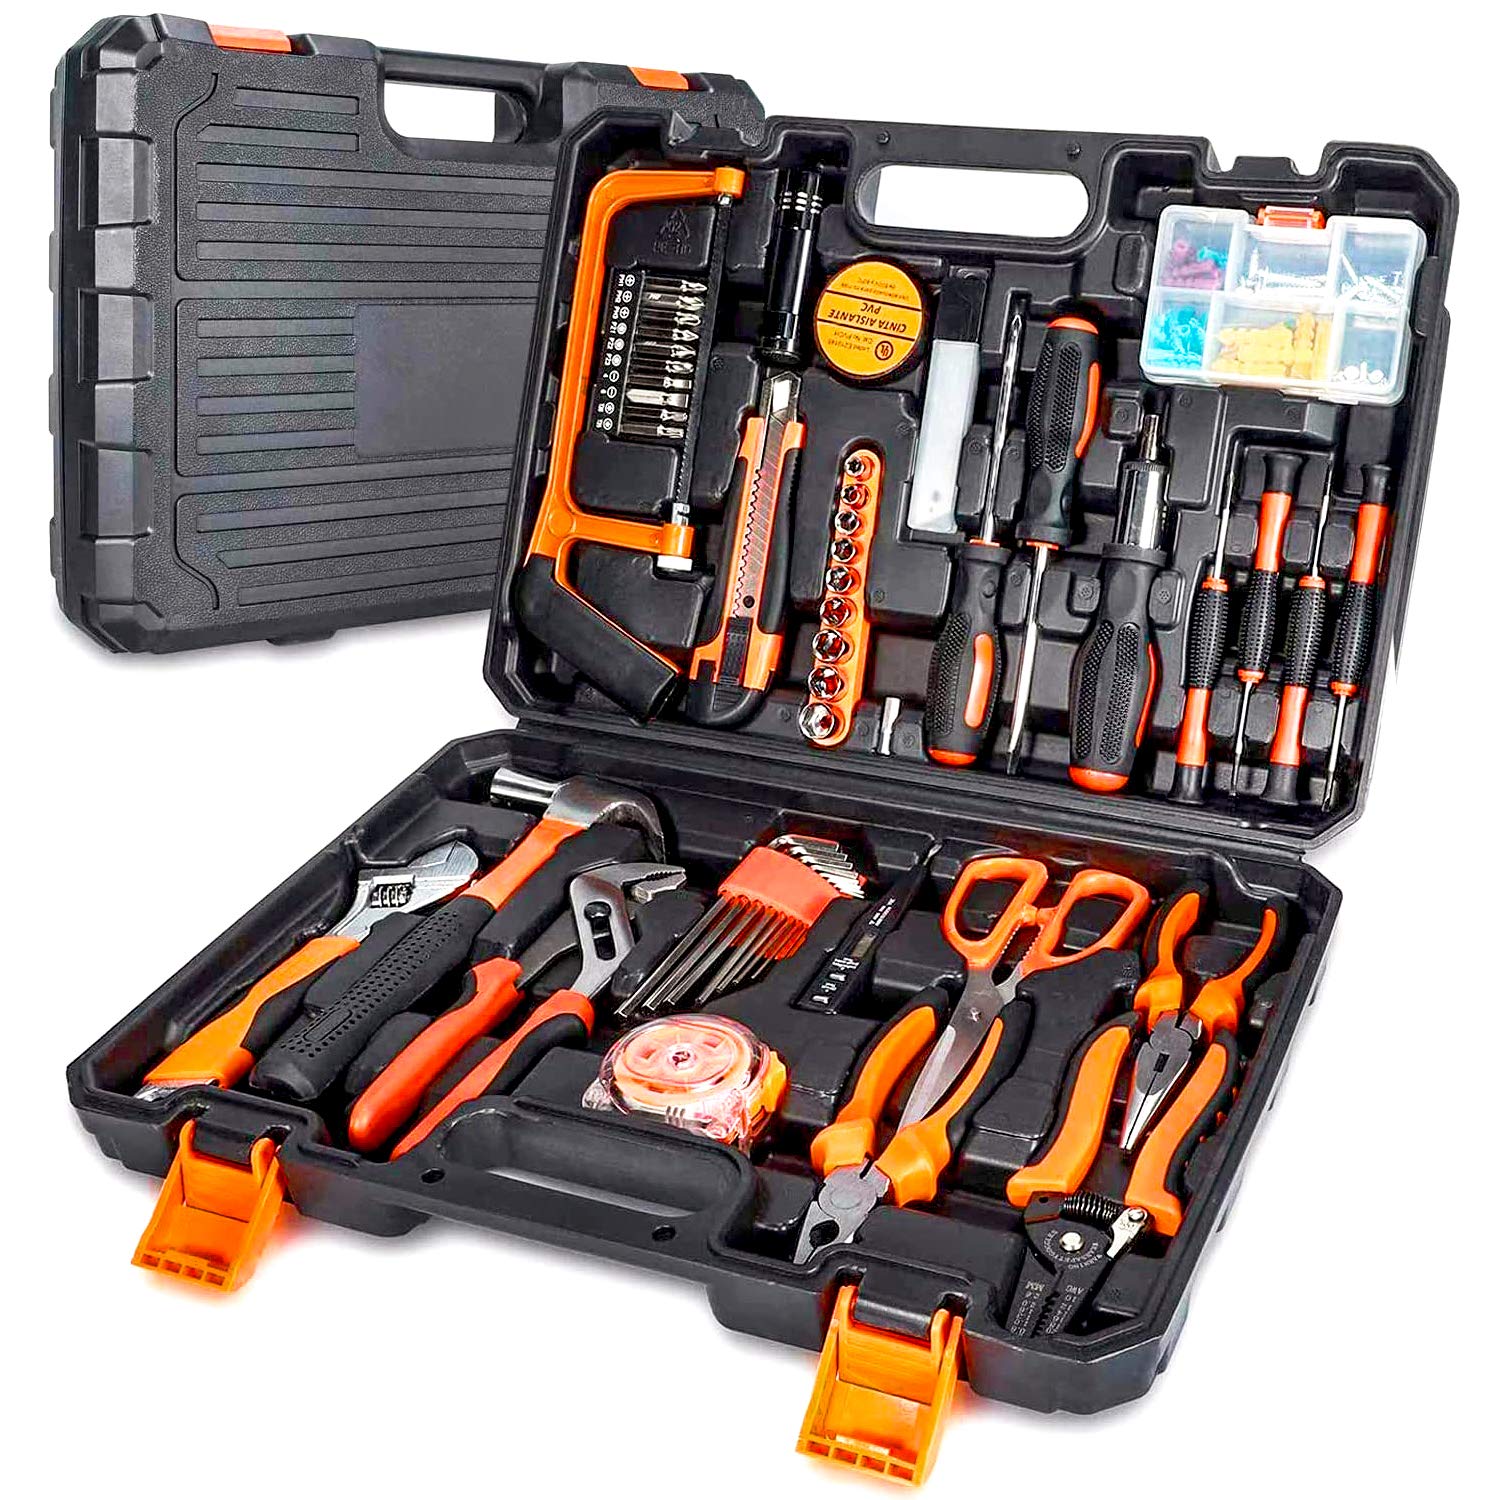 Repairing tools or toolbox.